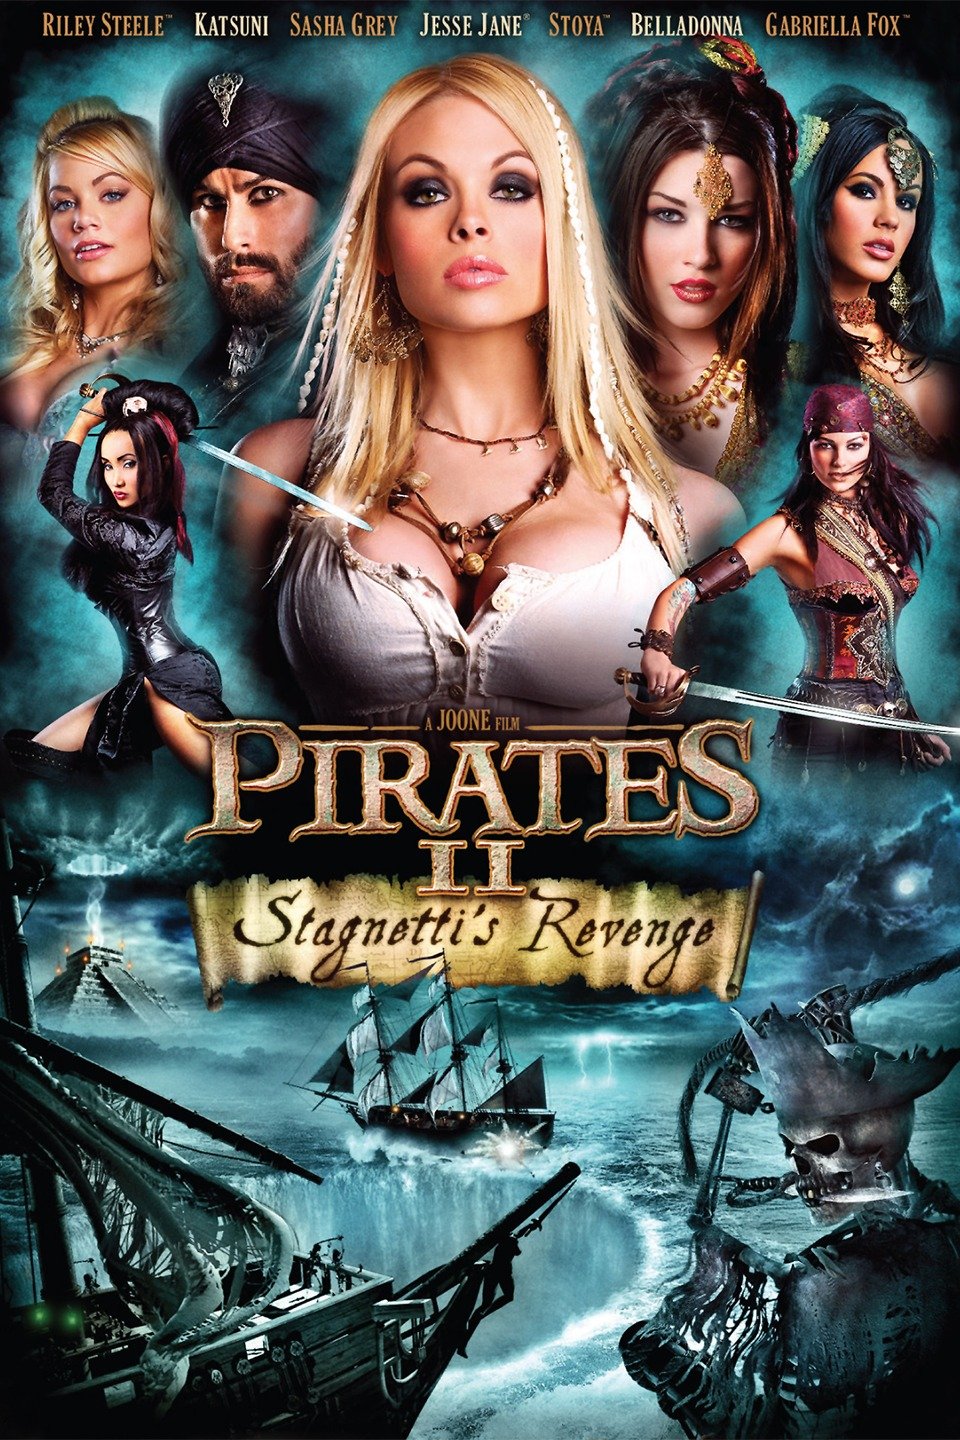 Pirates II: Stagnetti's Revenge - Movie Reviews.